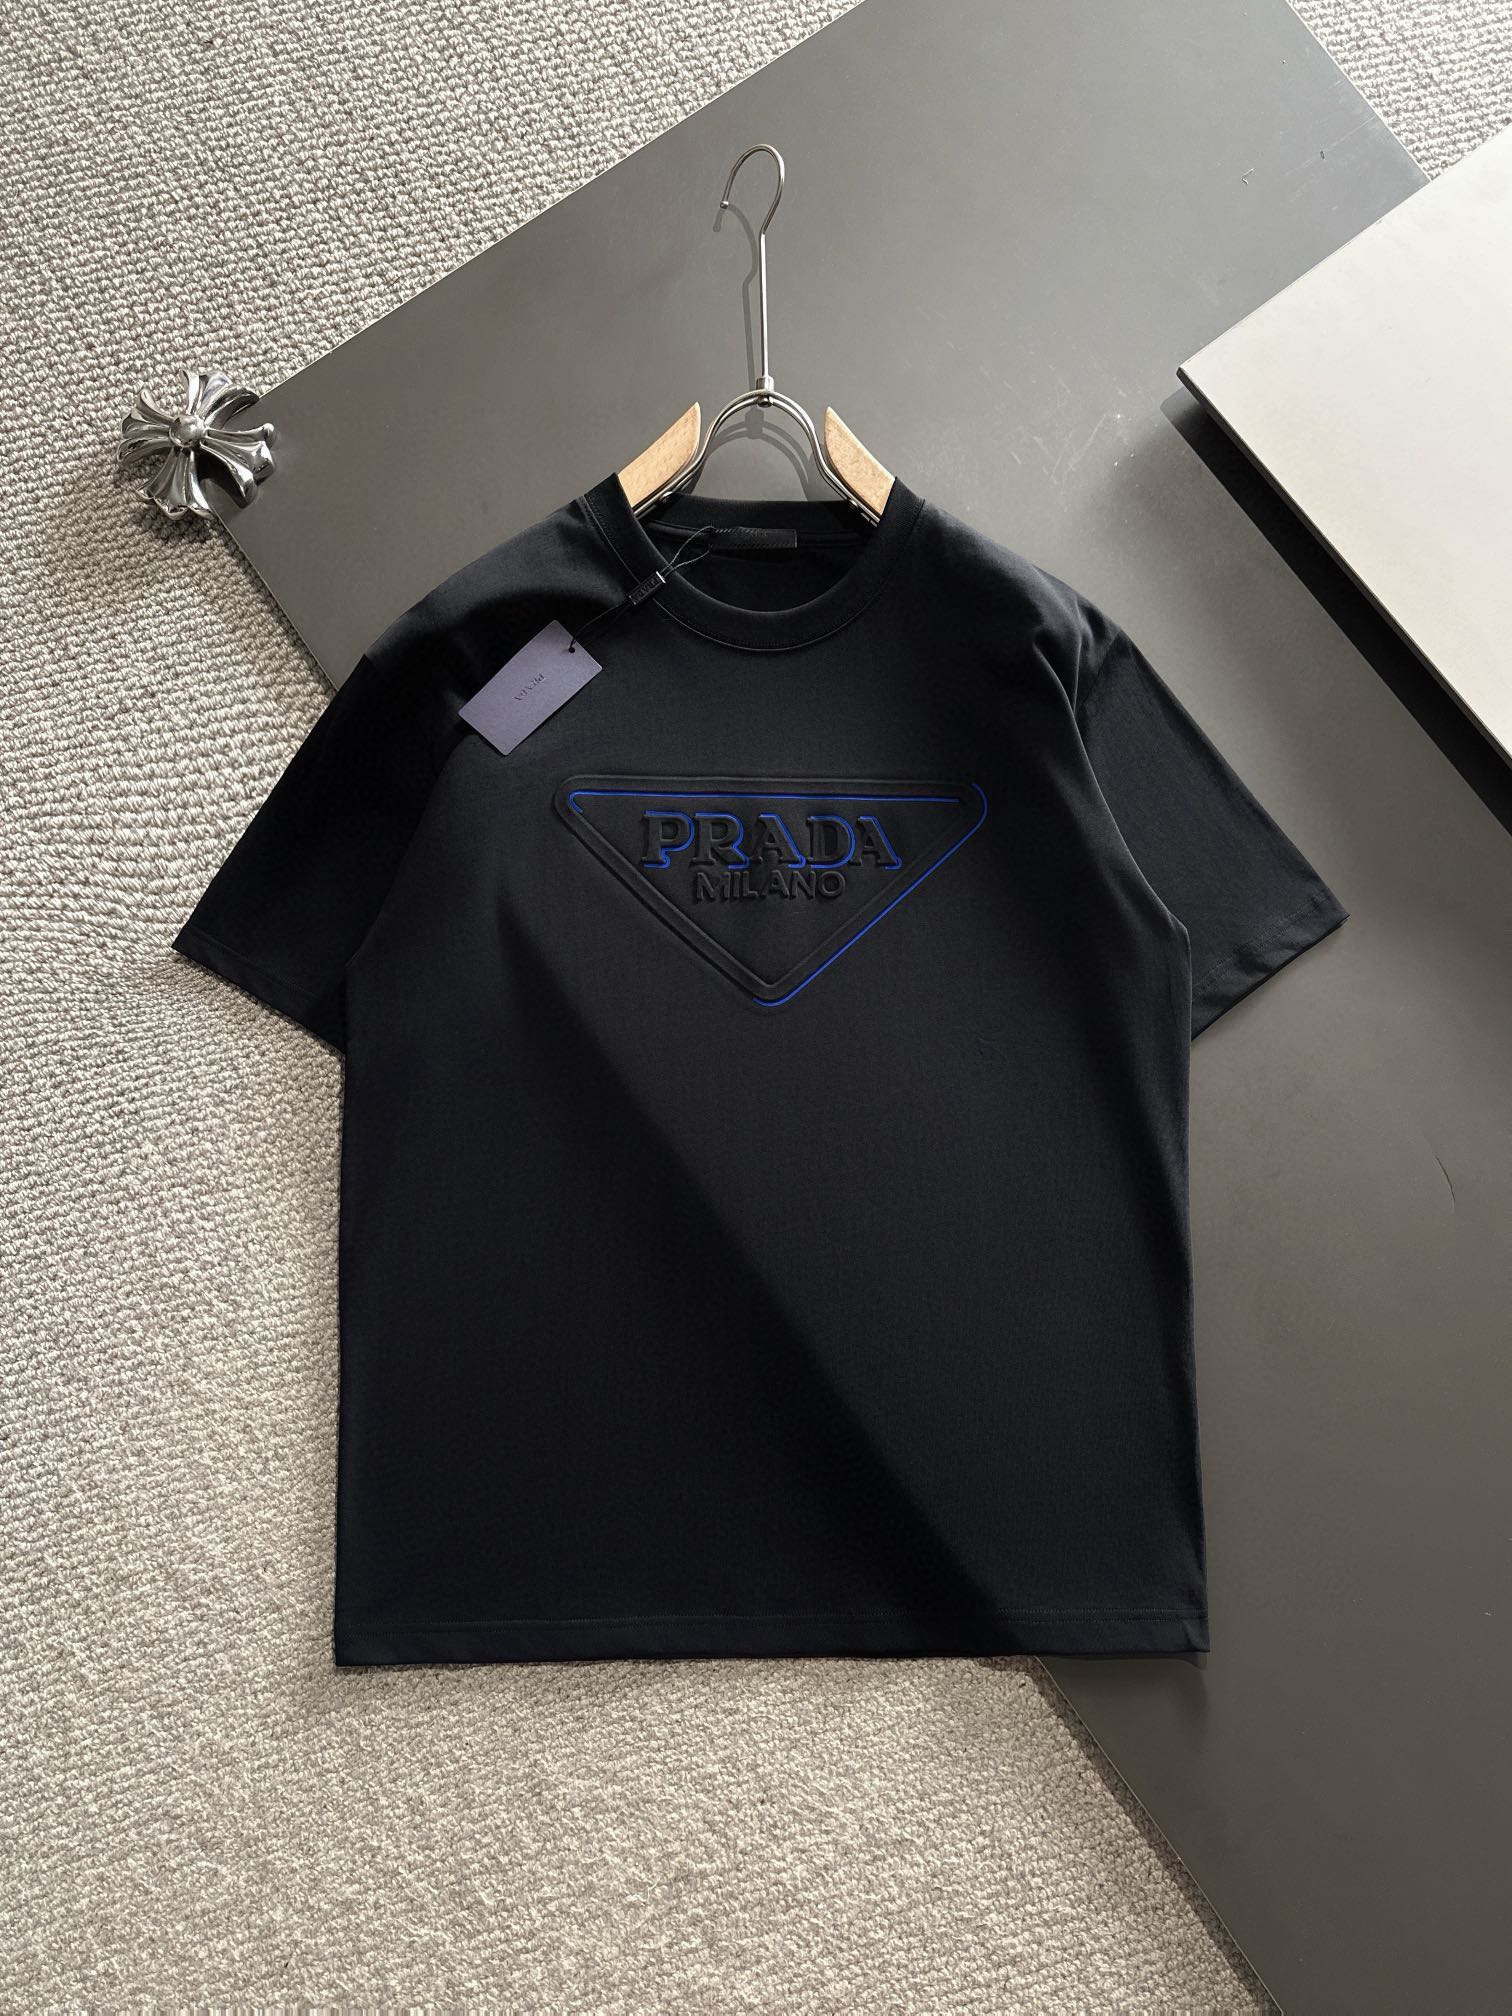 Prada Clothing T-Shirt Black White Unisex Spring Collection Short Sleeve